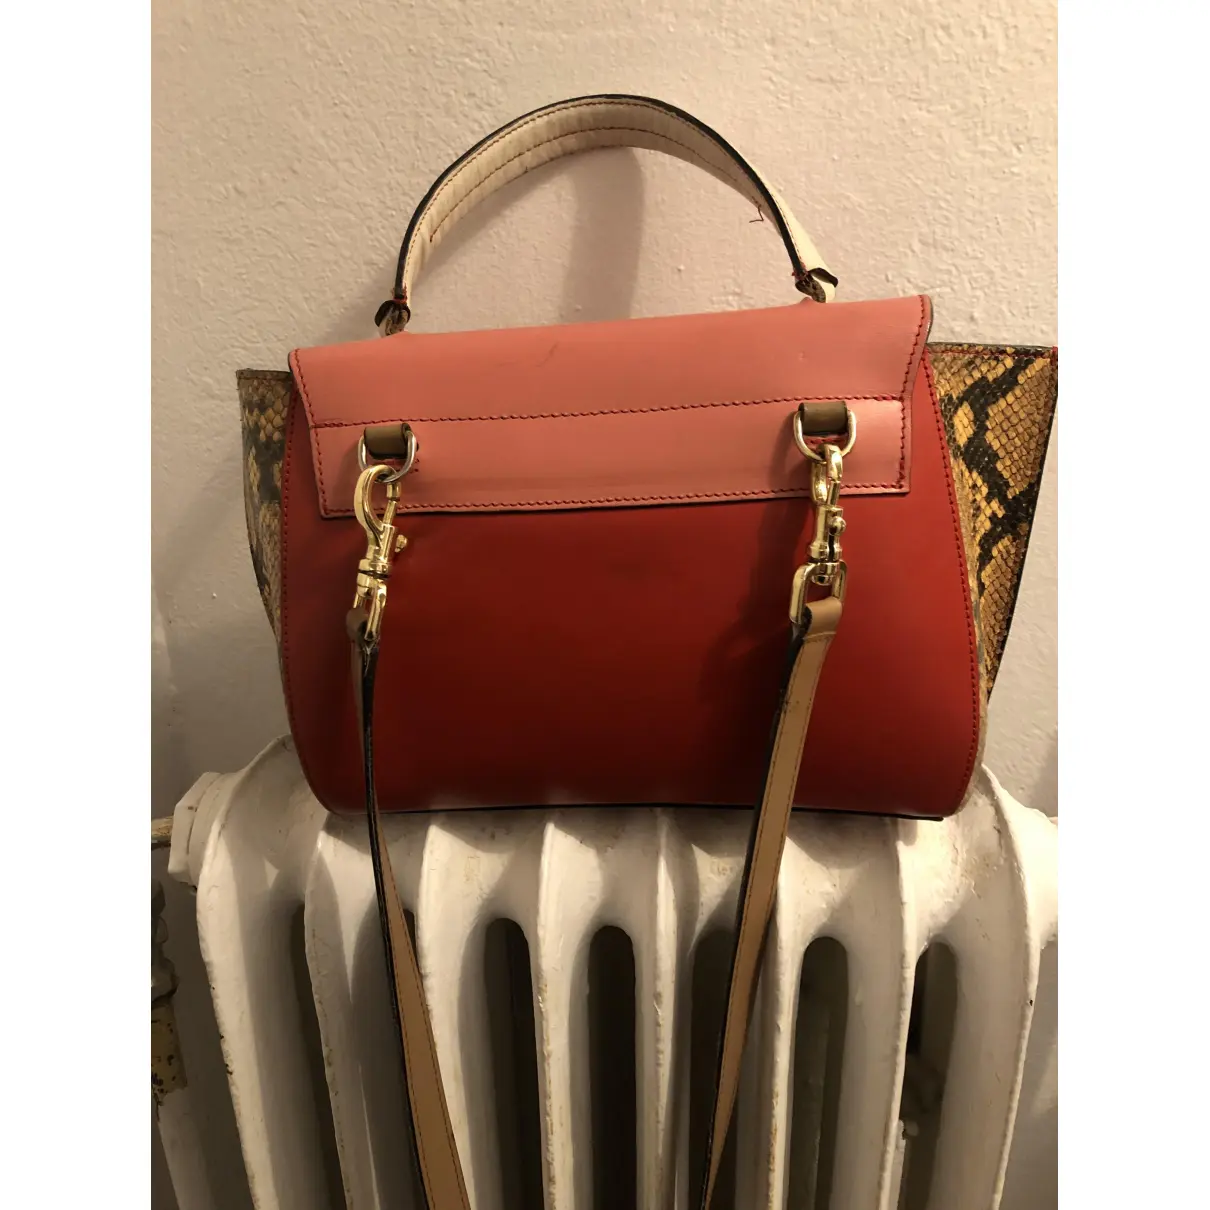 Buy ATP Atelier Leather handbag online